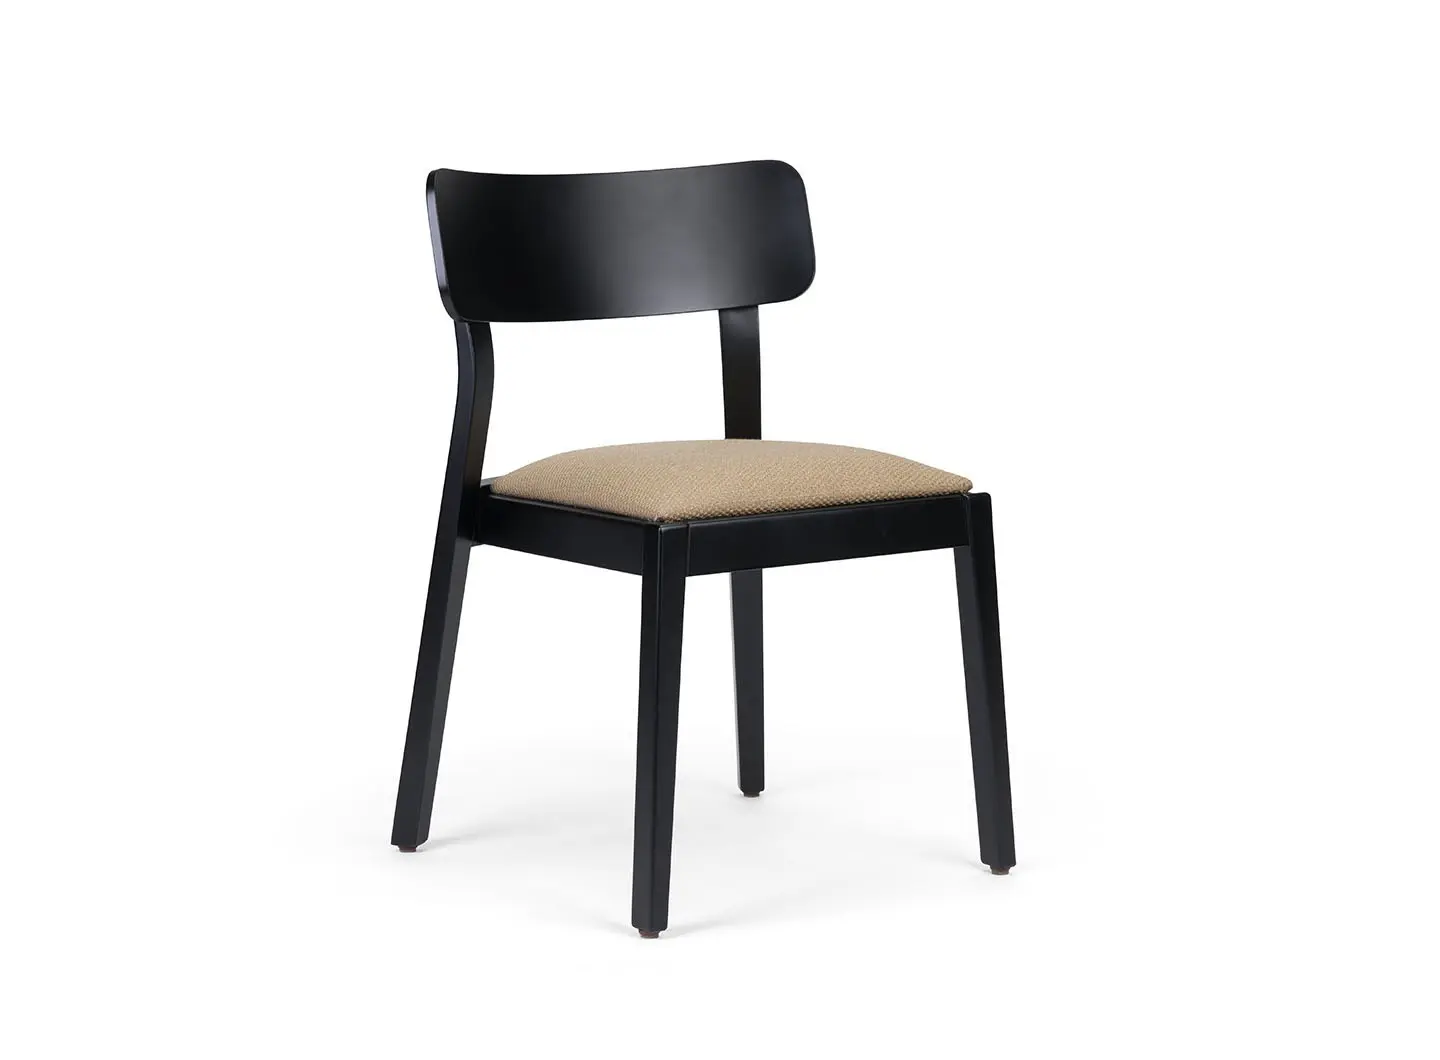 Suzanne chair by CarlesiTonelli Studio